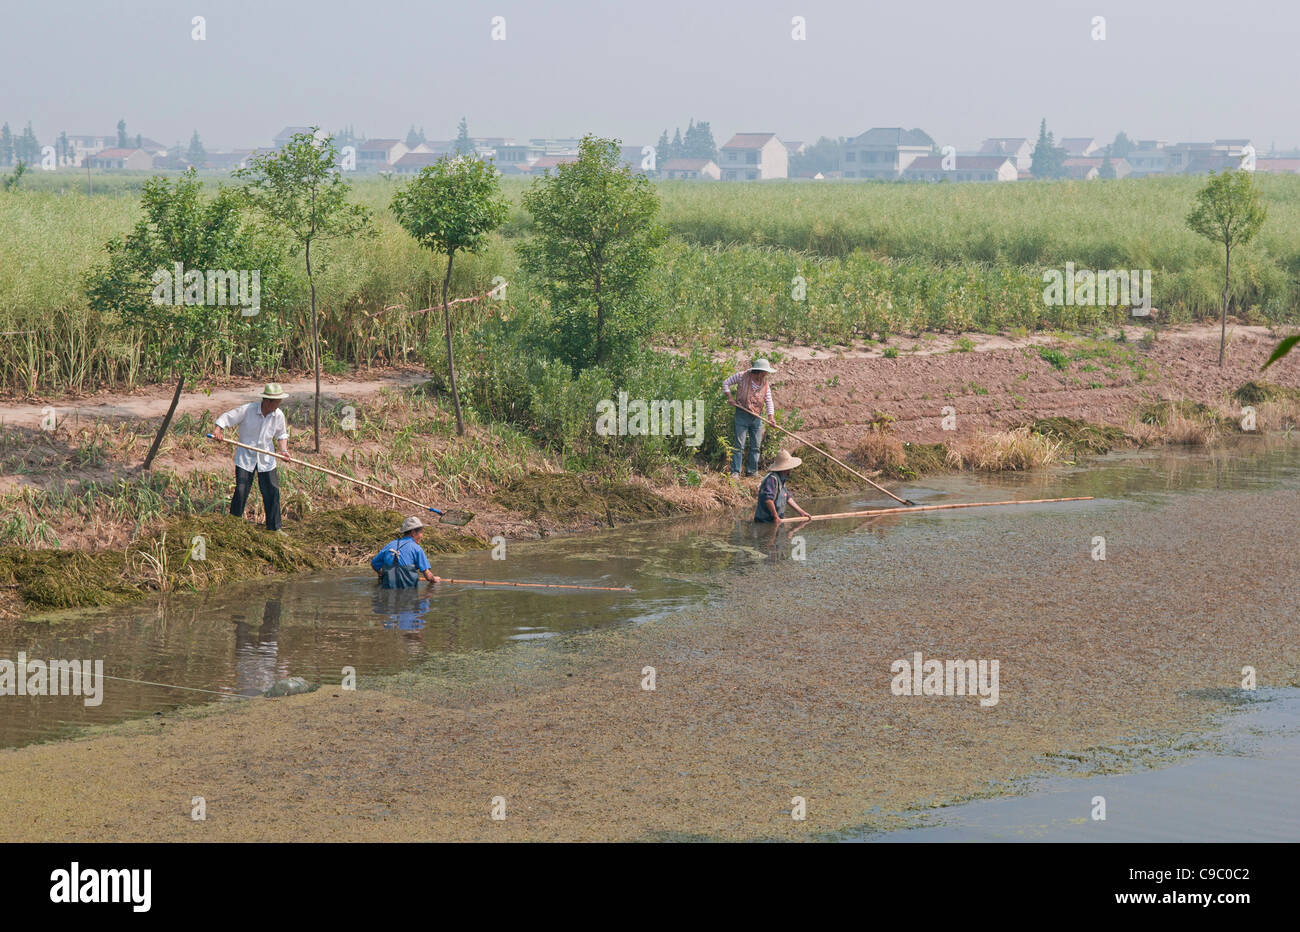 China, Jiangsu, Qidong, Farmers clearing aquatic vegetation from a choked irrigation canal with bamboo poles. Stock Photo